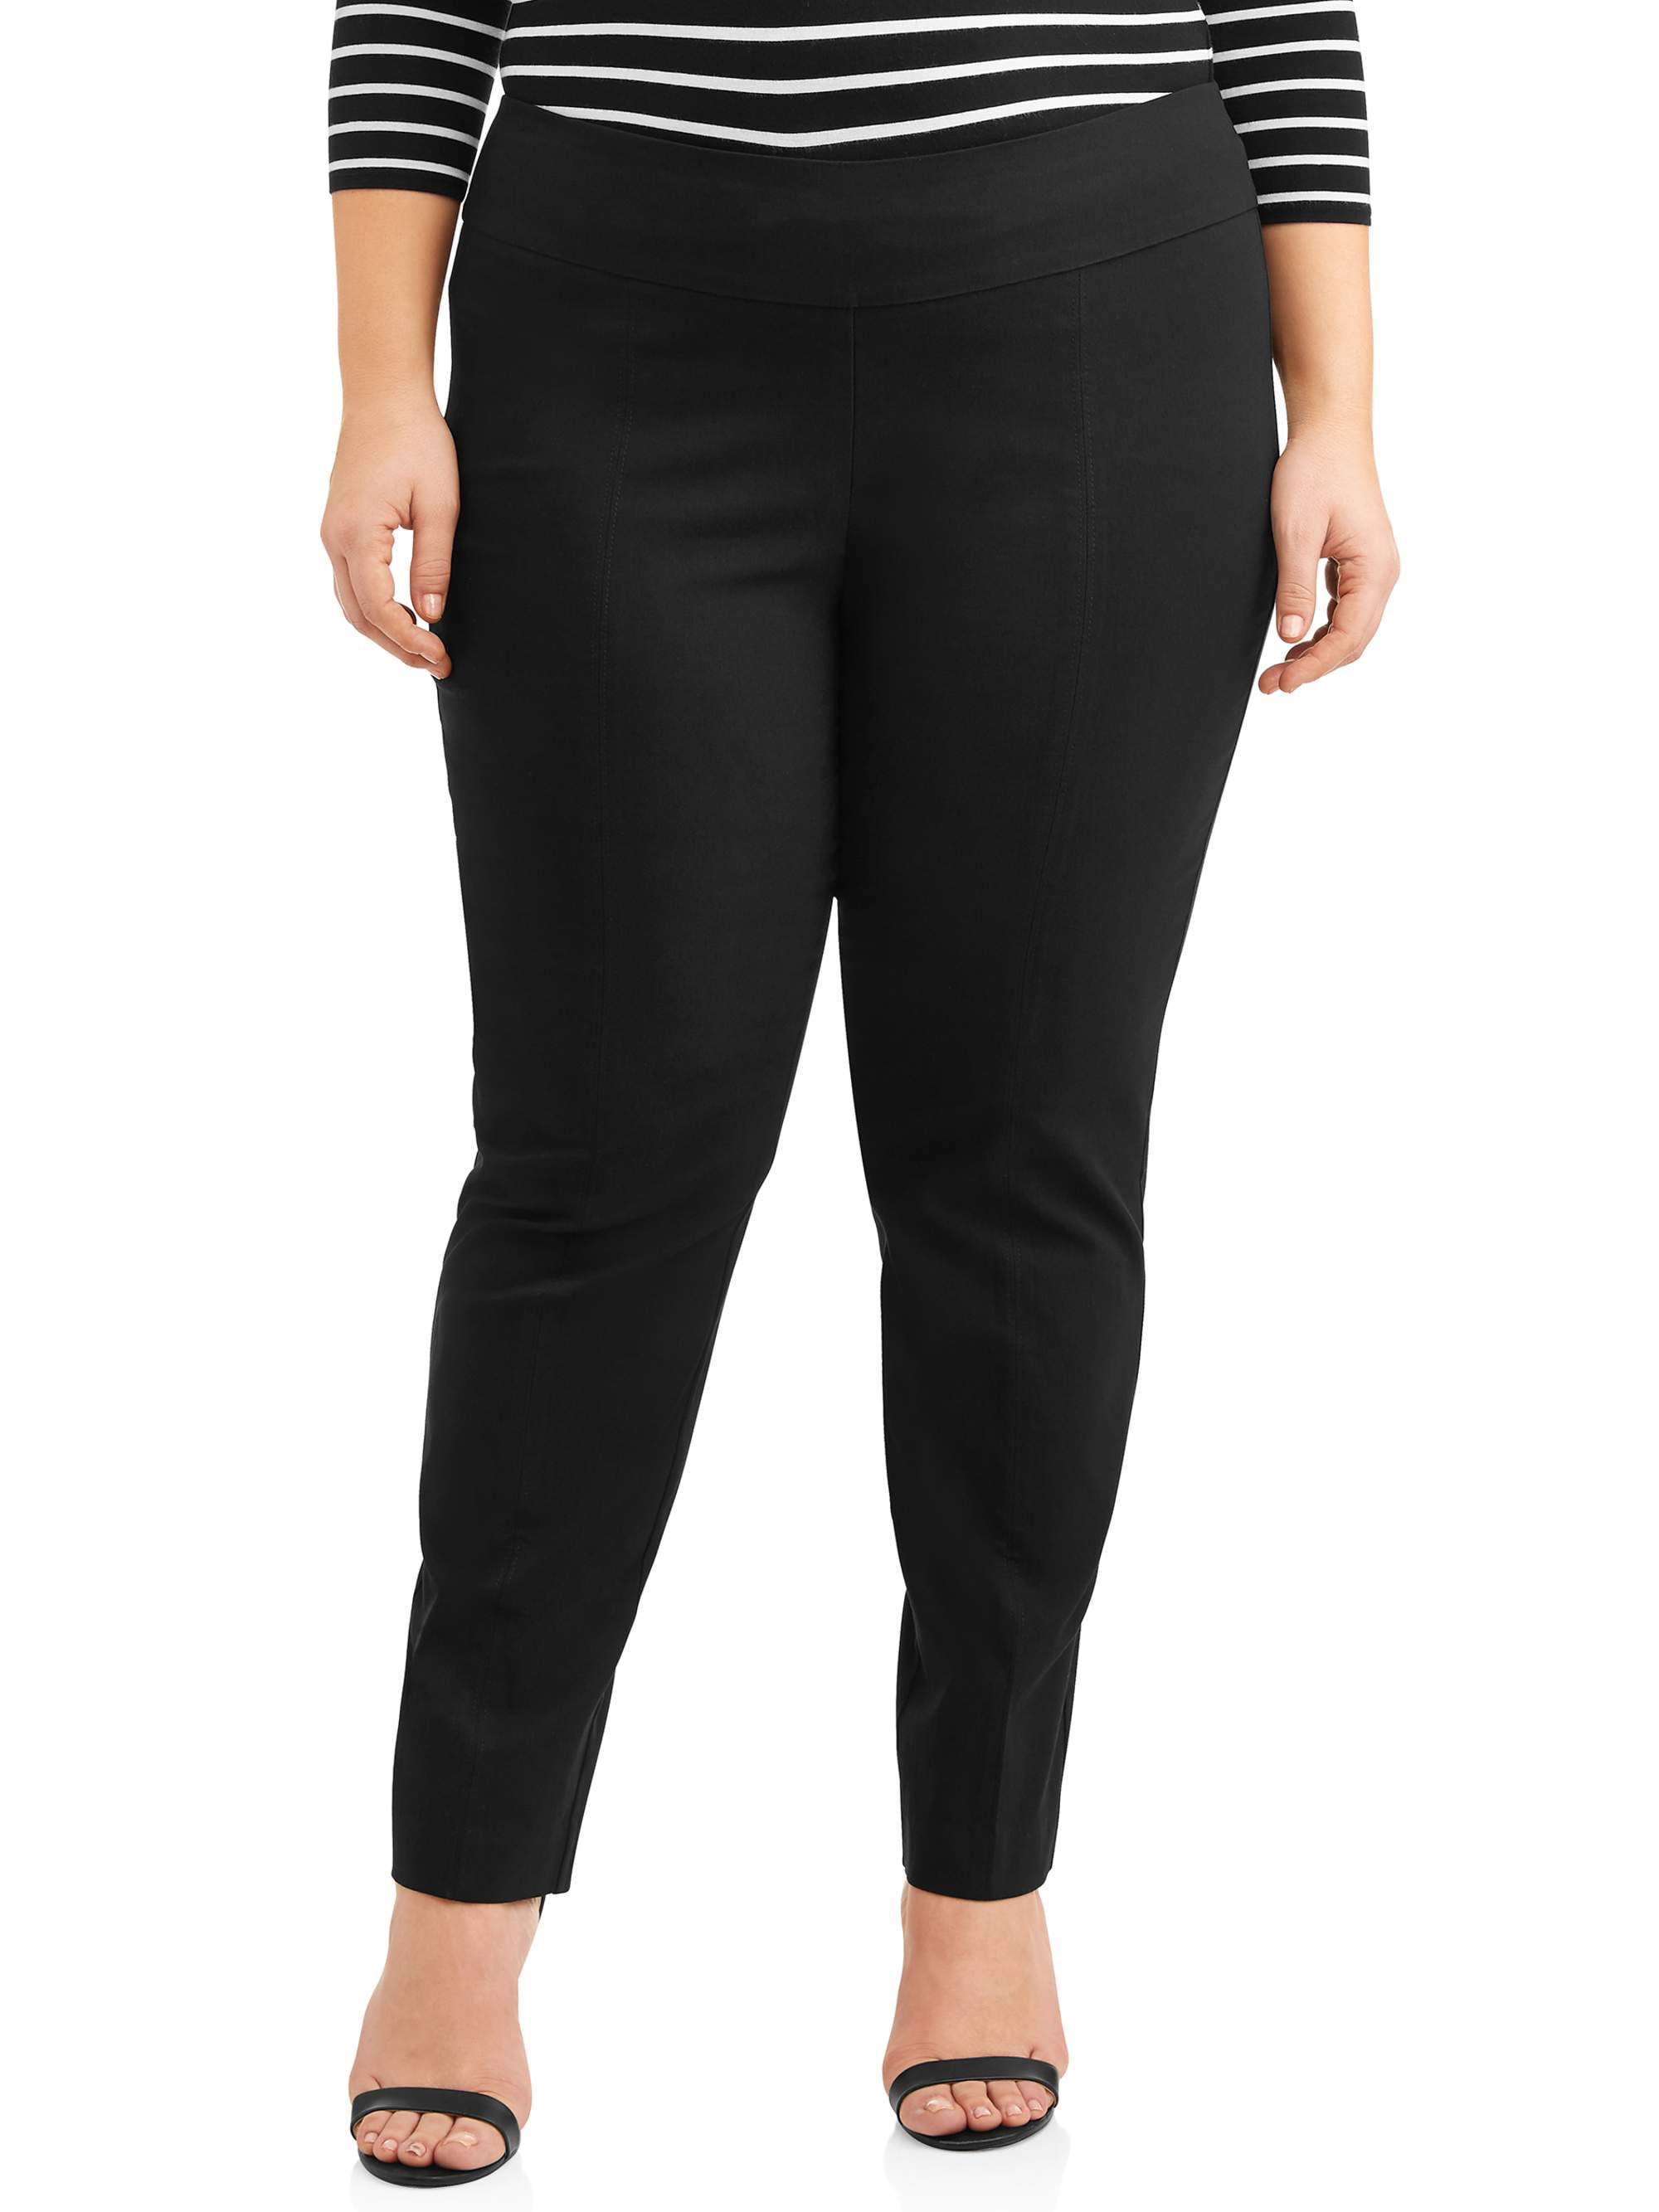 Zac & Rachel Women's Plus Size Pull-On Millennium Pants - Walmart.com